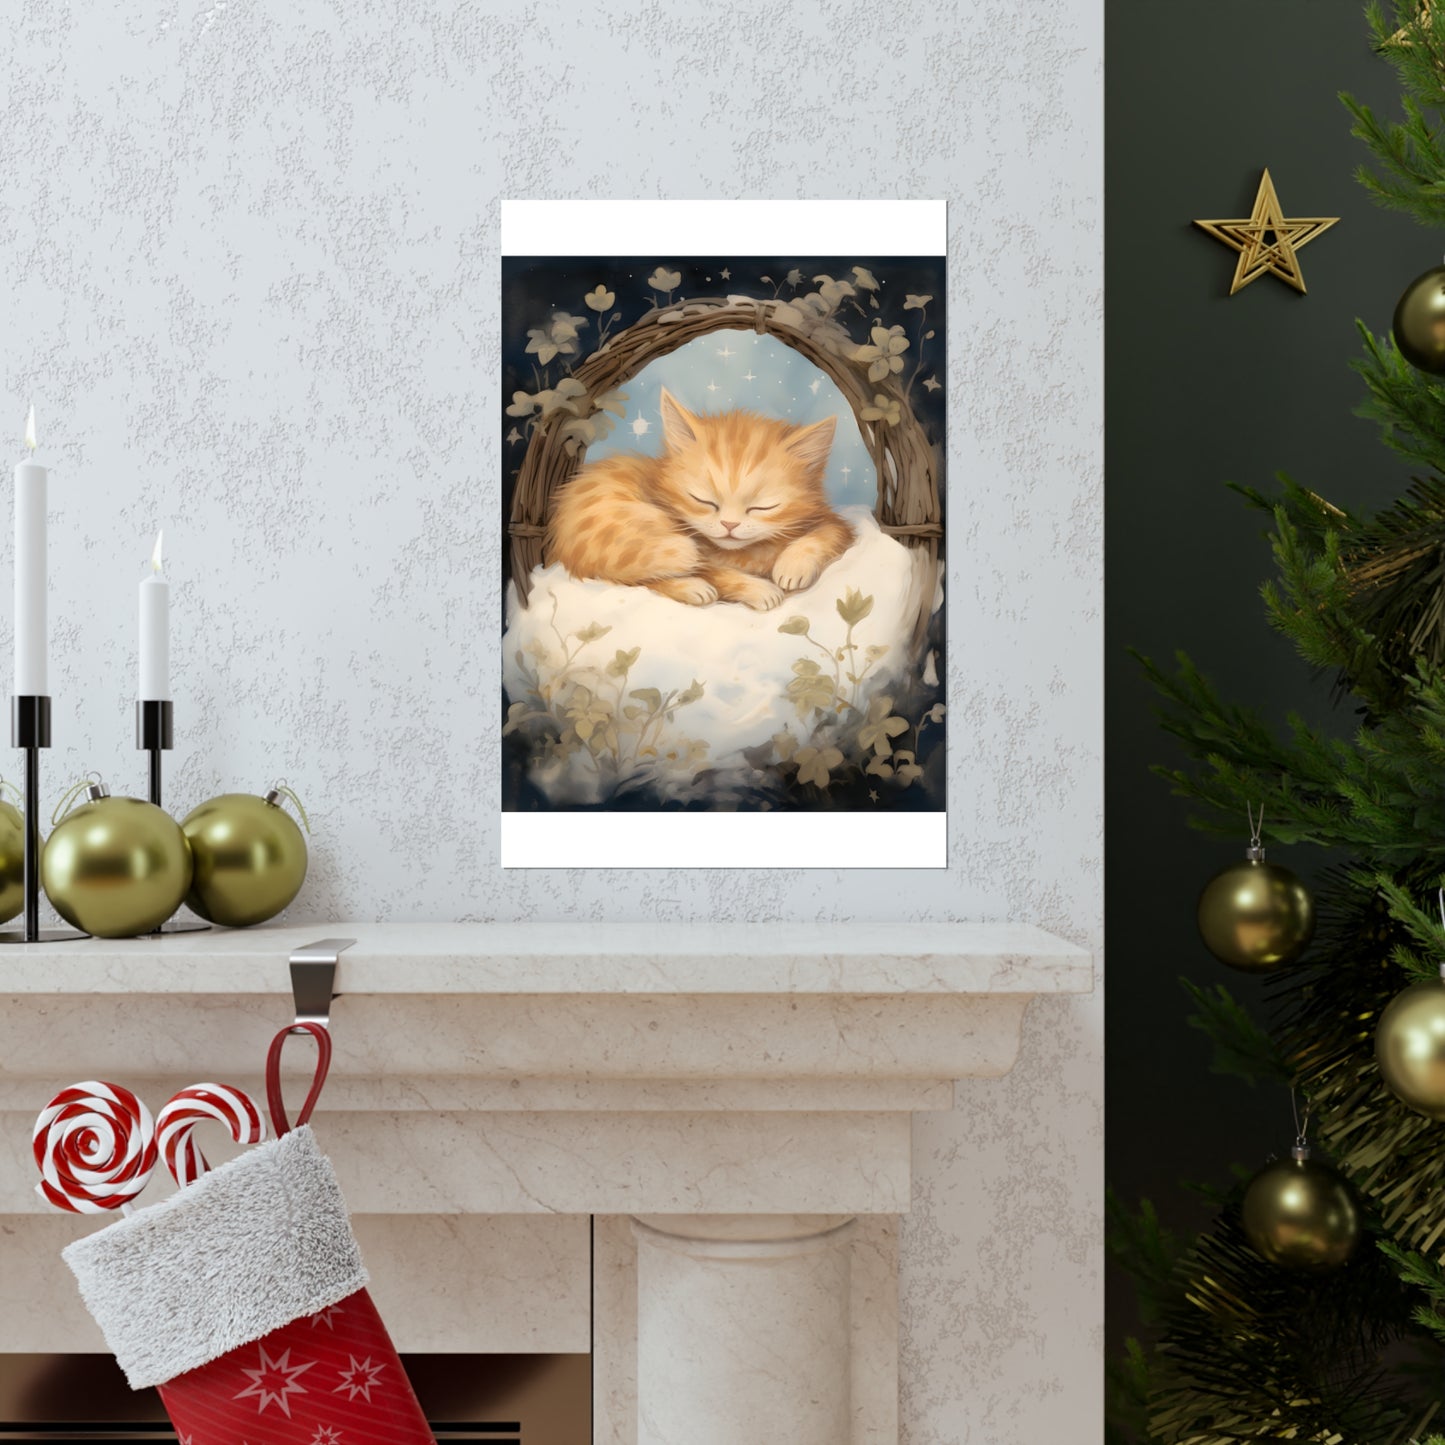 Cute Sleeping Cat, Cat Illustration, Nursery Print, Watercolor Art, Animal Art, Nursery Wall Decor, Nursery Decor, Nursery Wall Art, - CosmicDeva